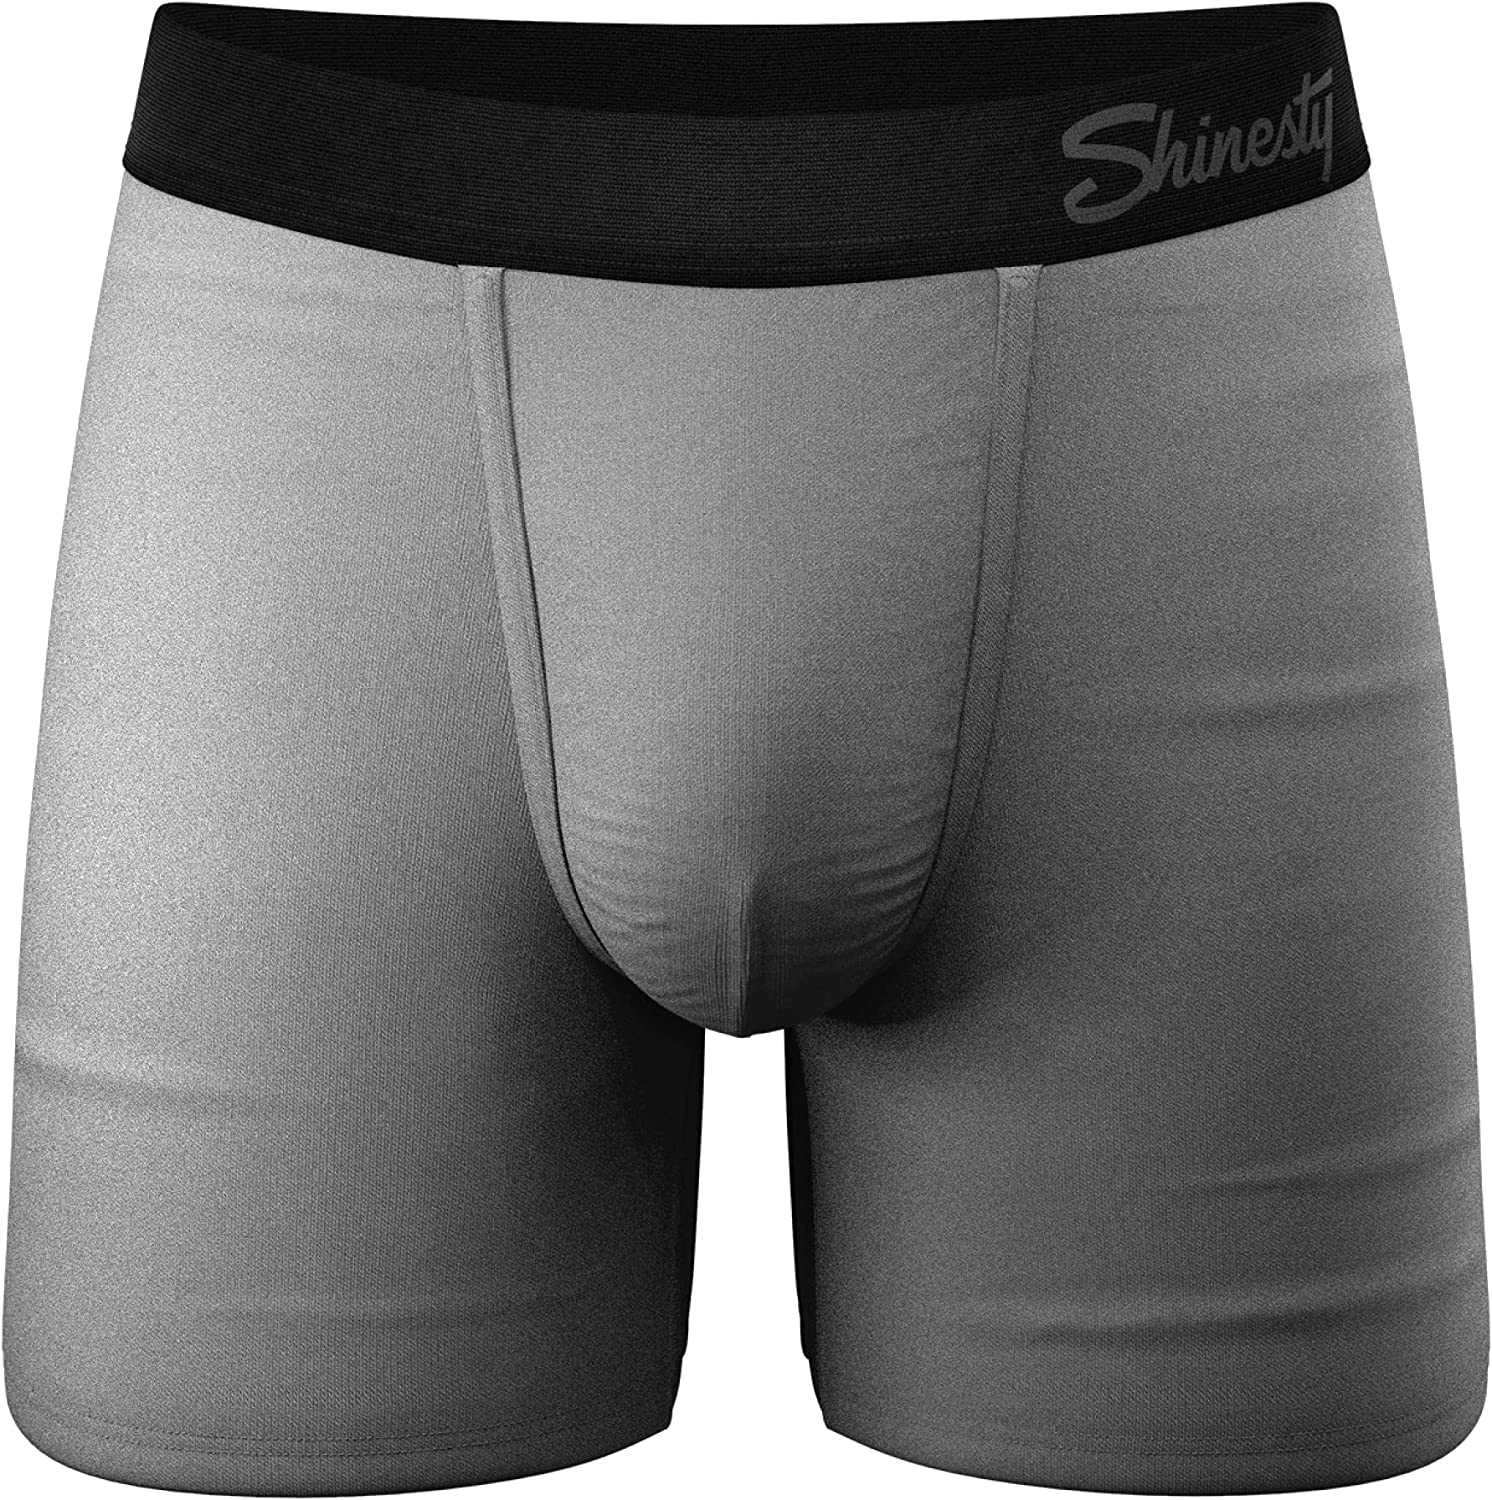 52025 Men Boxers Underwear Micro Modal Fabric Open-fly Men's